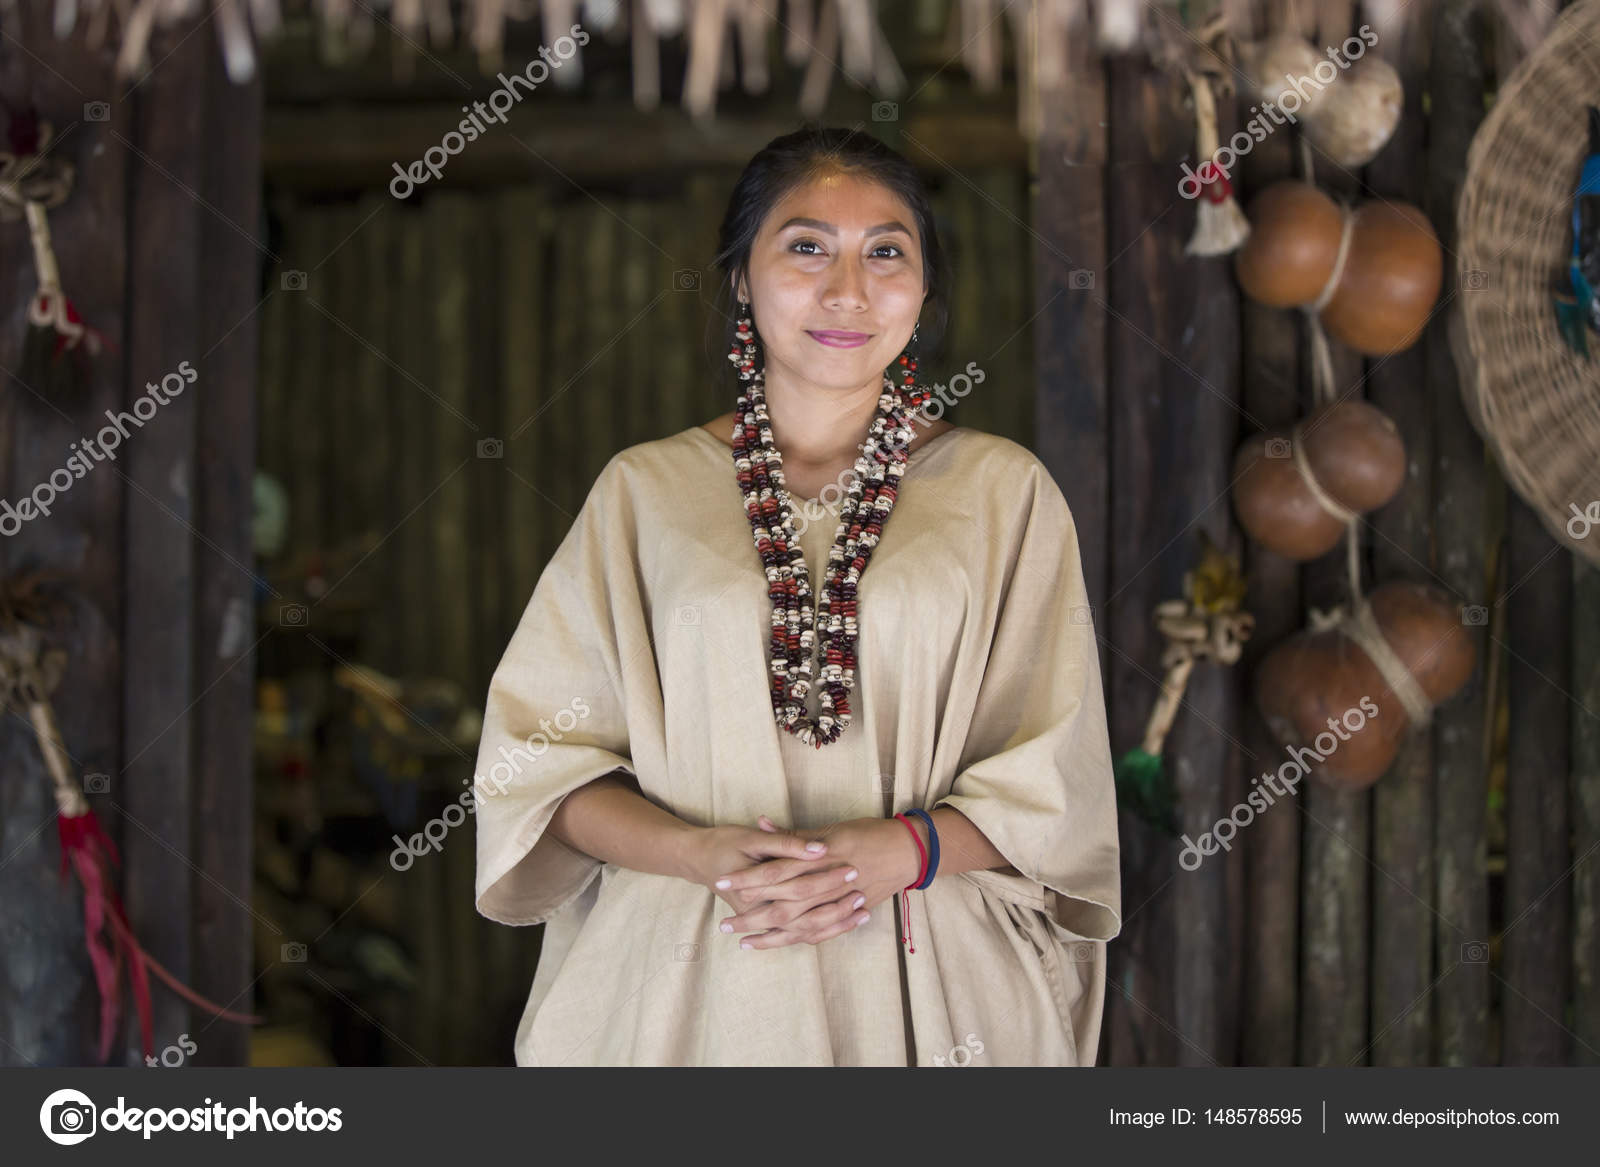 Indian costume for women -  México